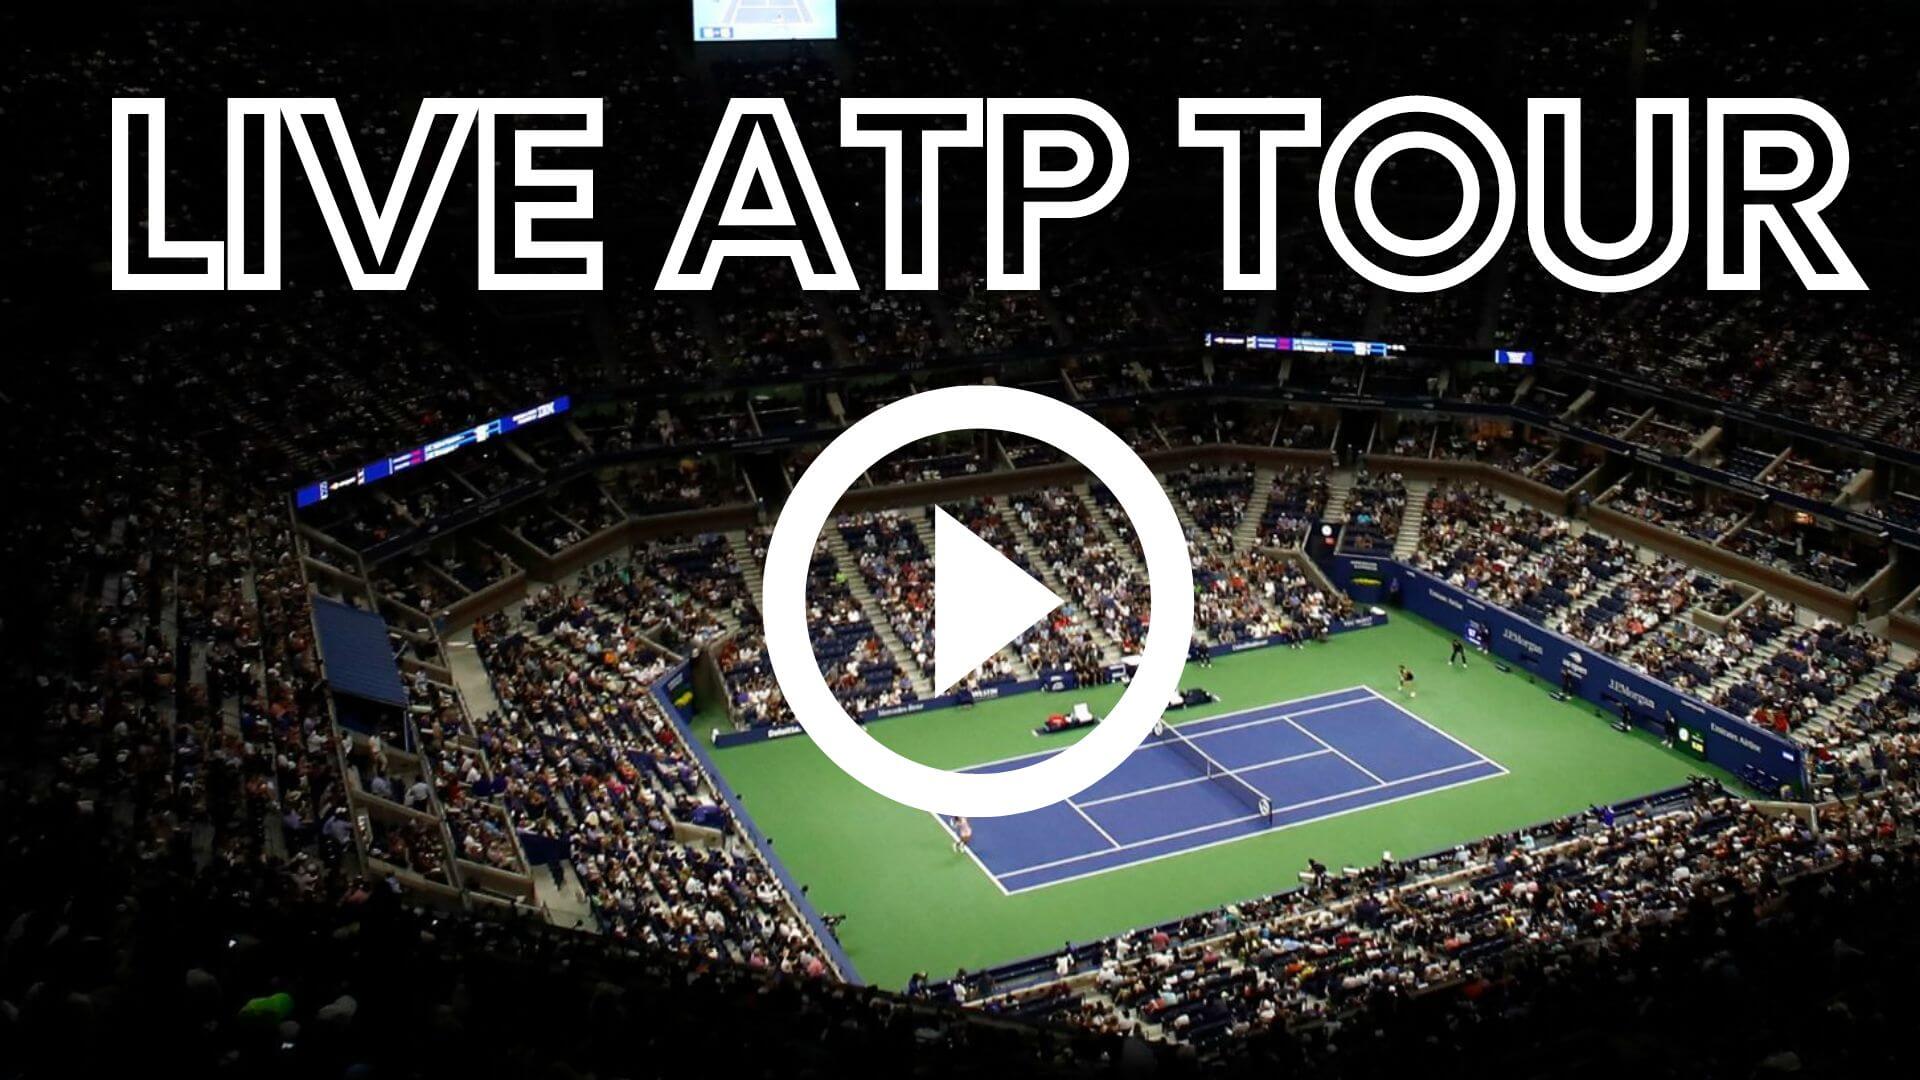 dubai-tennis-championships-atp-tour-live-stream